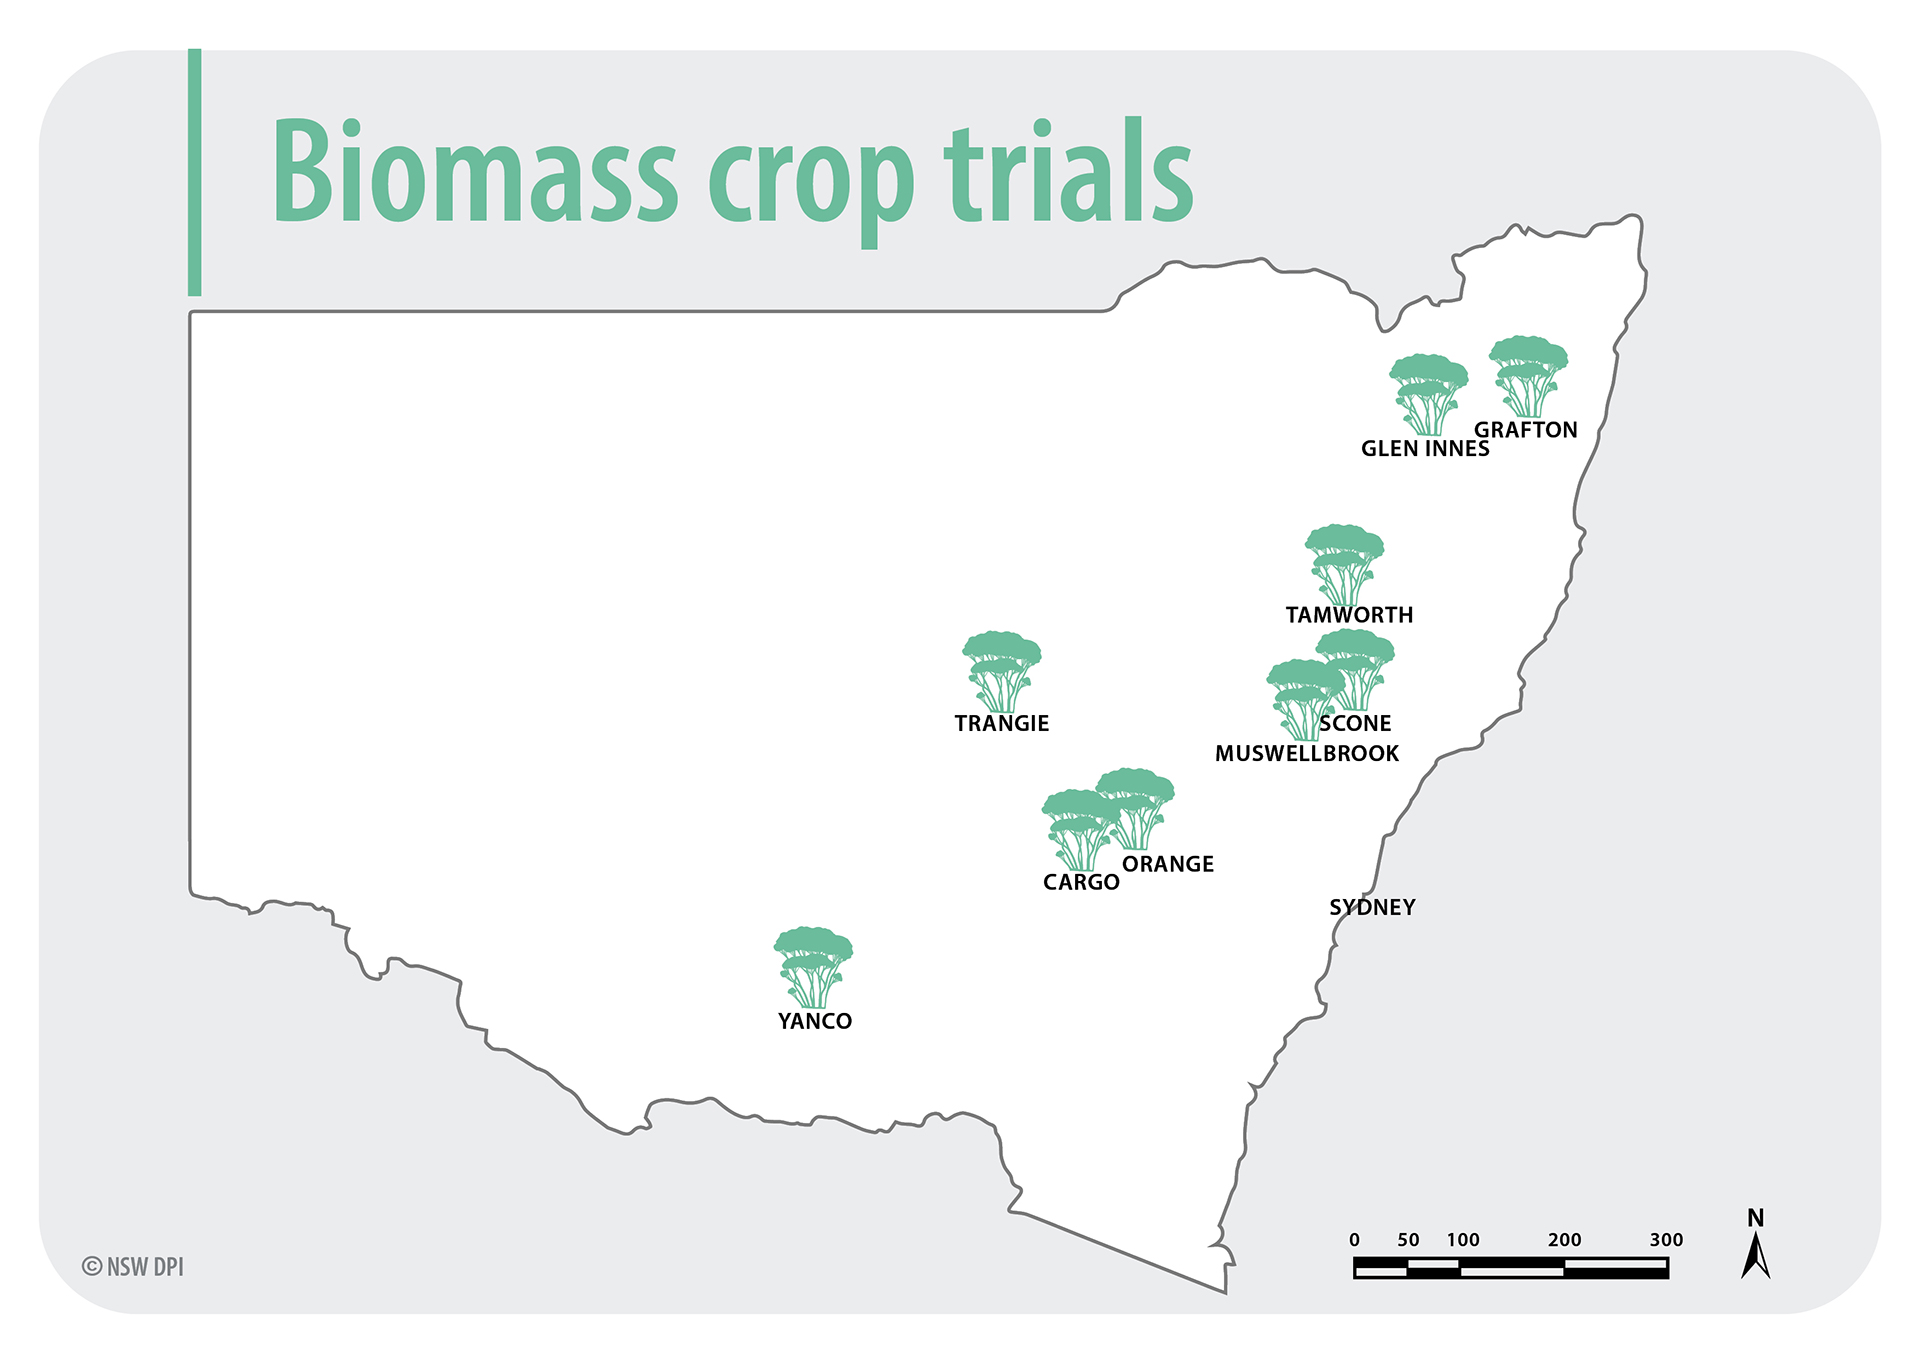 Biomass crop trials across NSW - location map